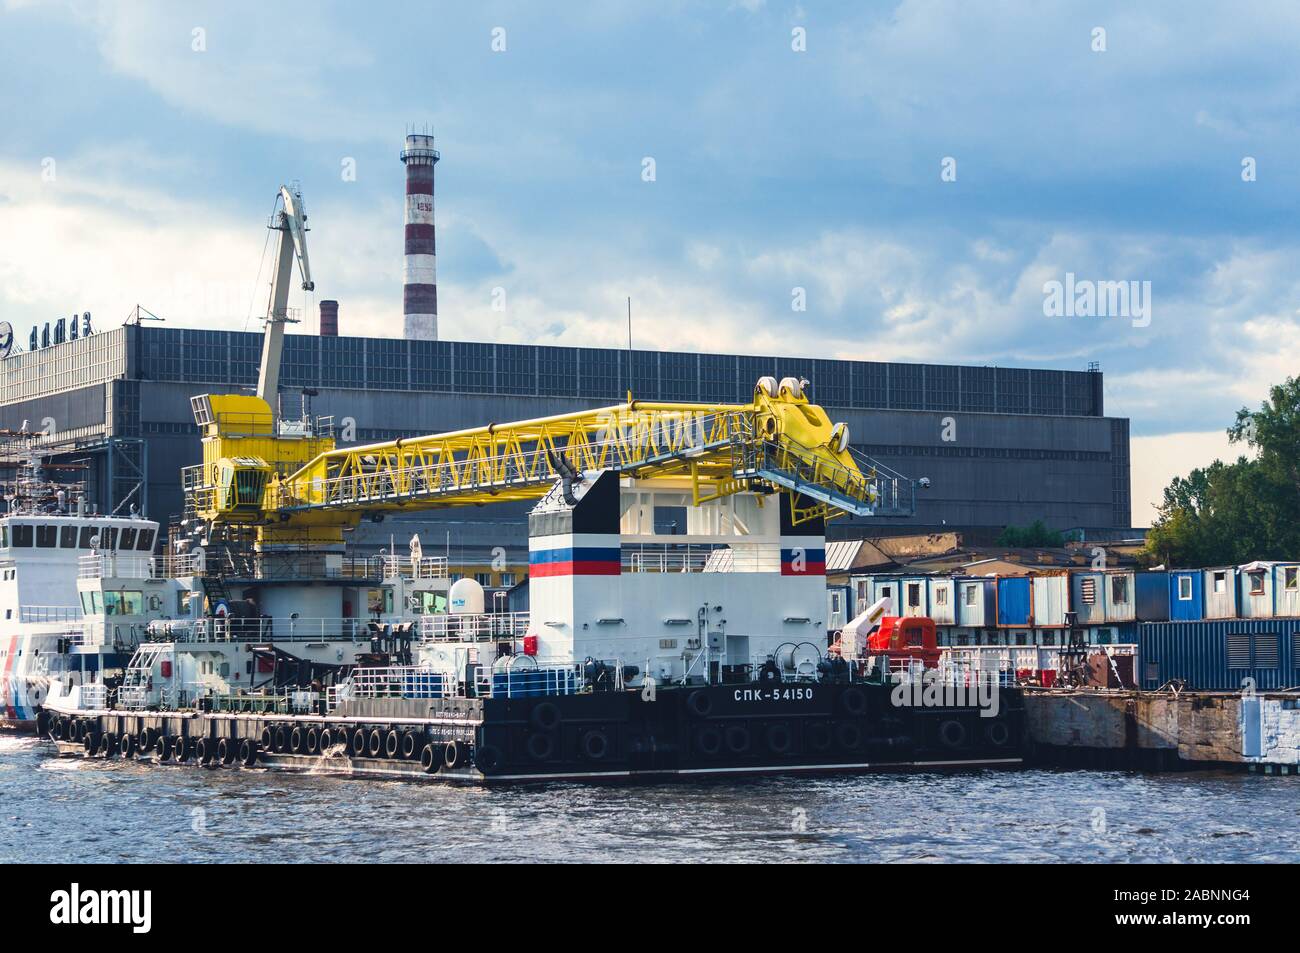 St.Petersburg, Russia - July 23, 2019 - Floating crane near shipyard Almaz on Neva river Stock Photo